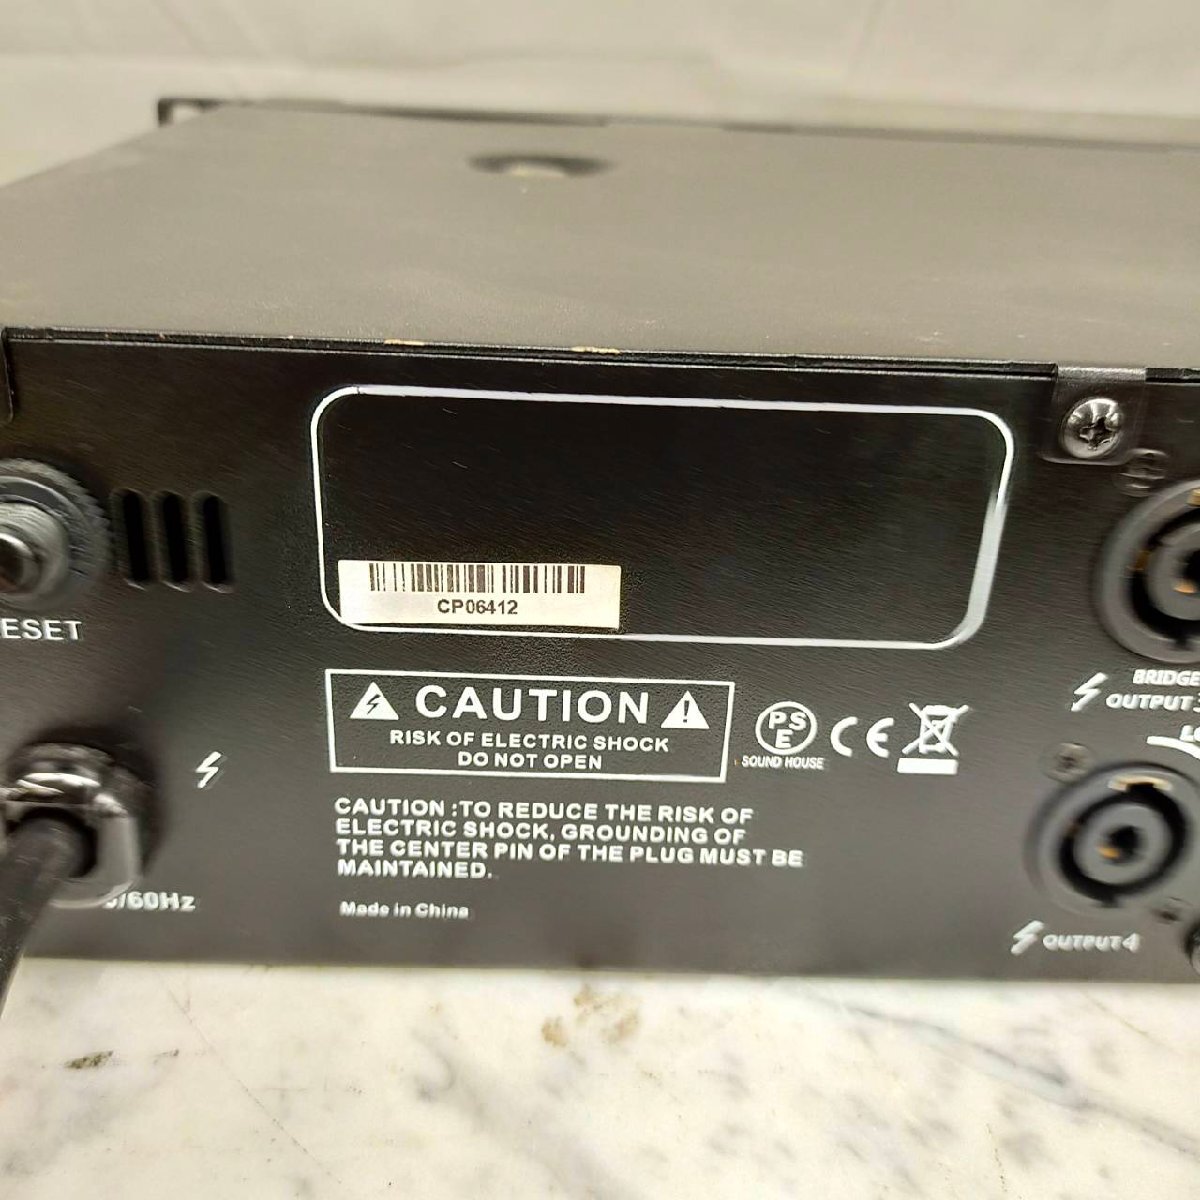 T8065*[ present condition goods ]CLASSIC PRO classic Pro CPX4420 power amplifier 